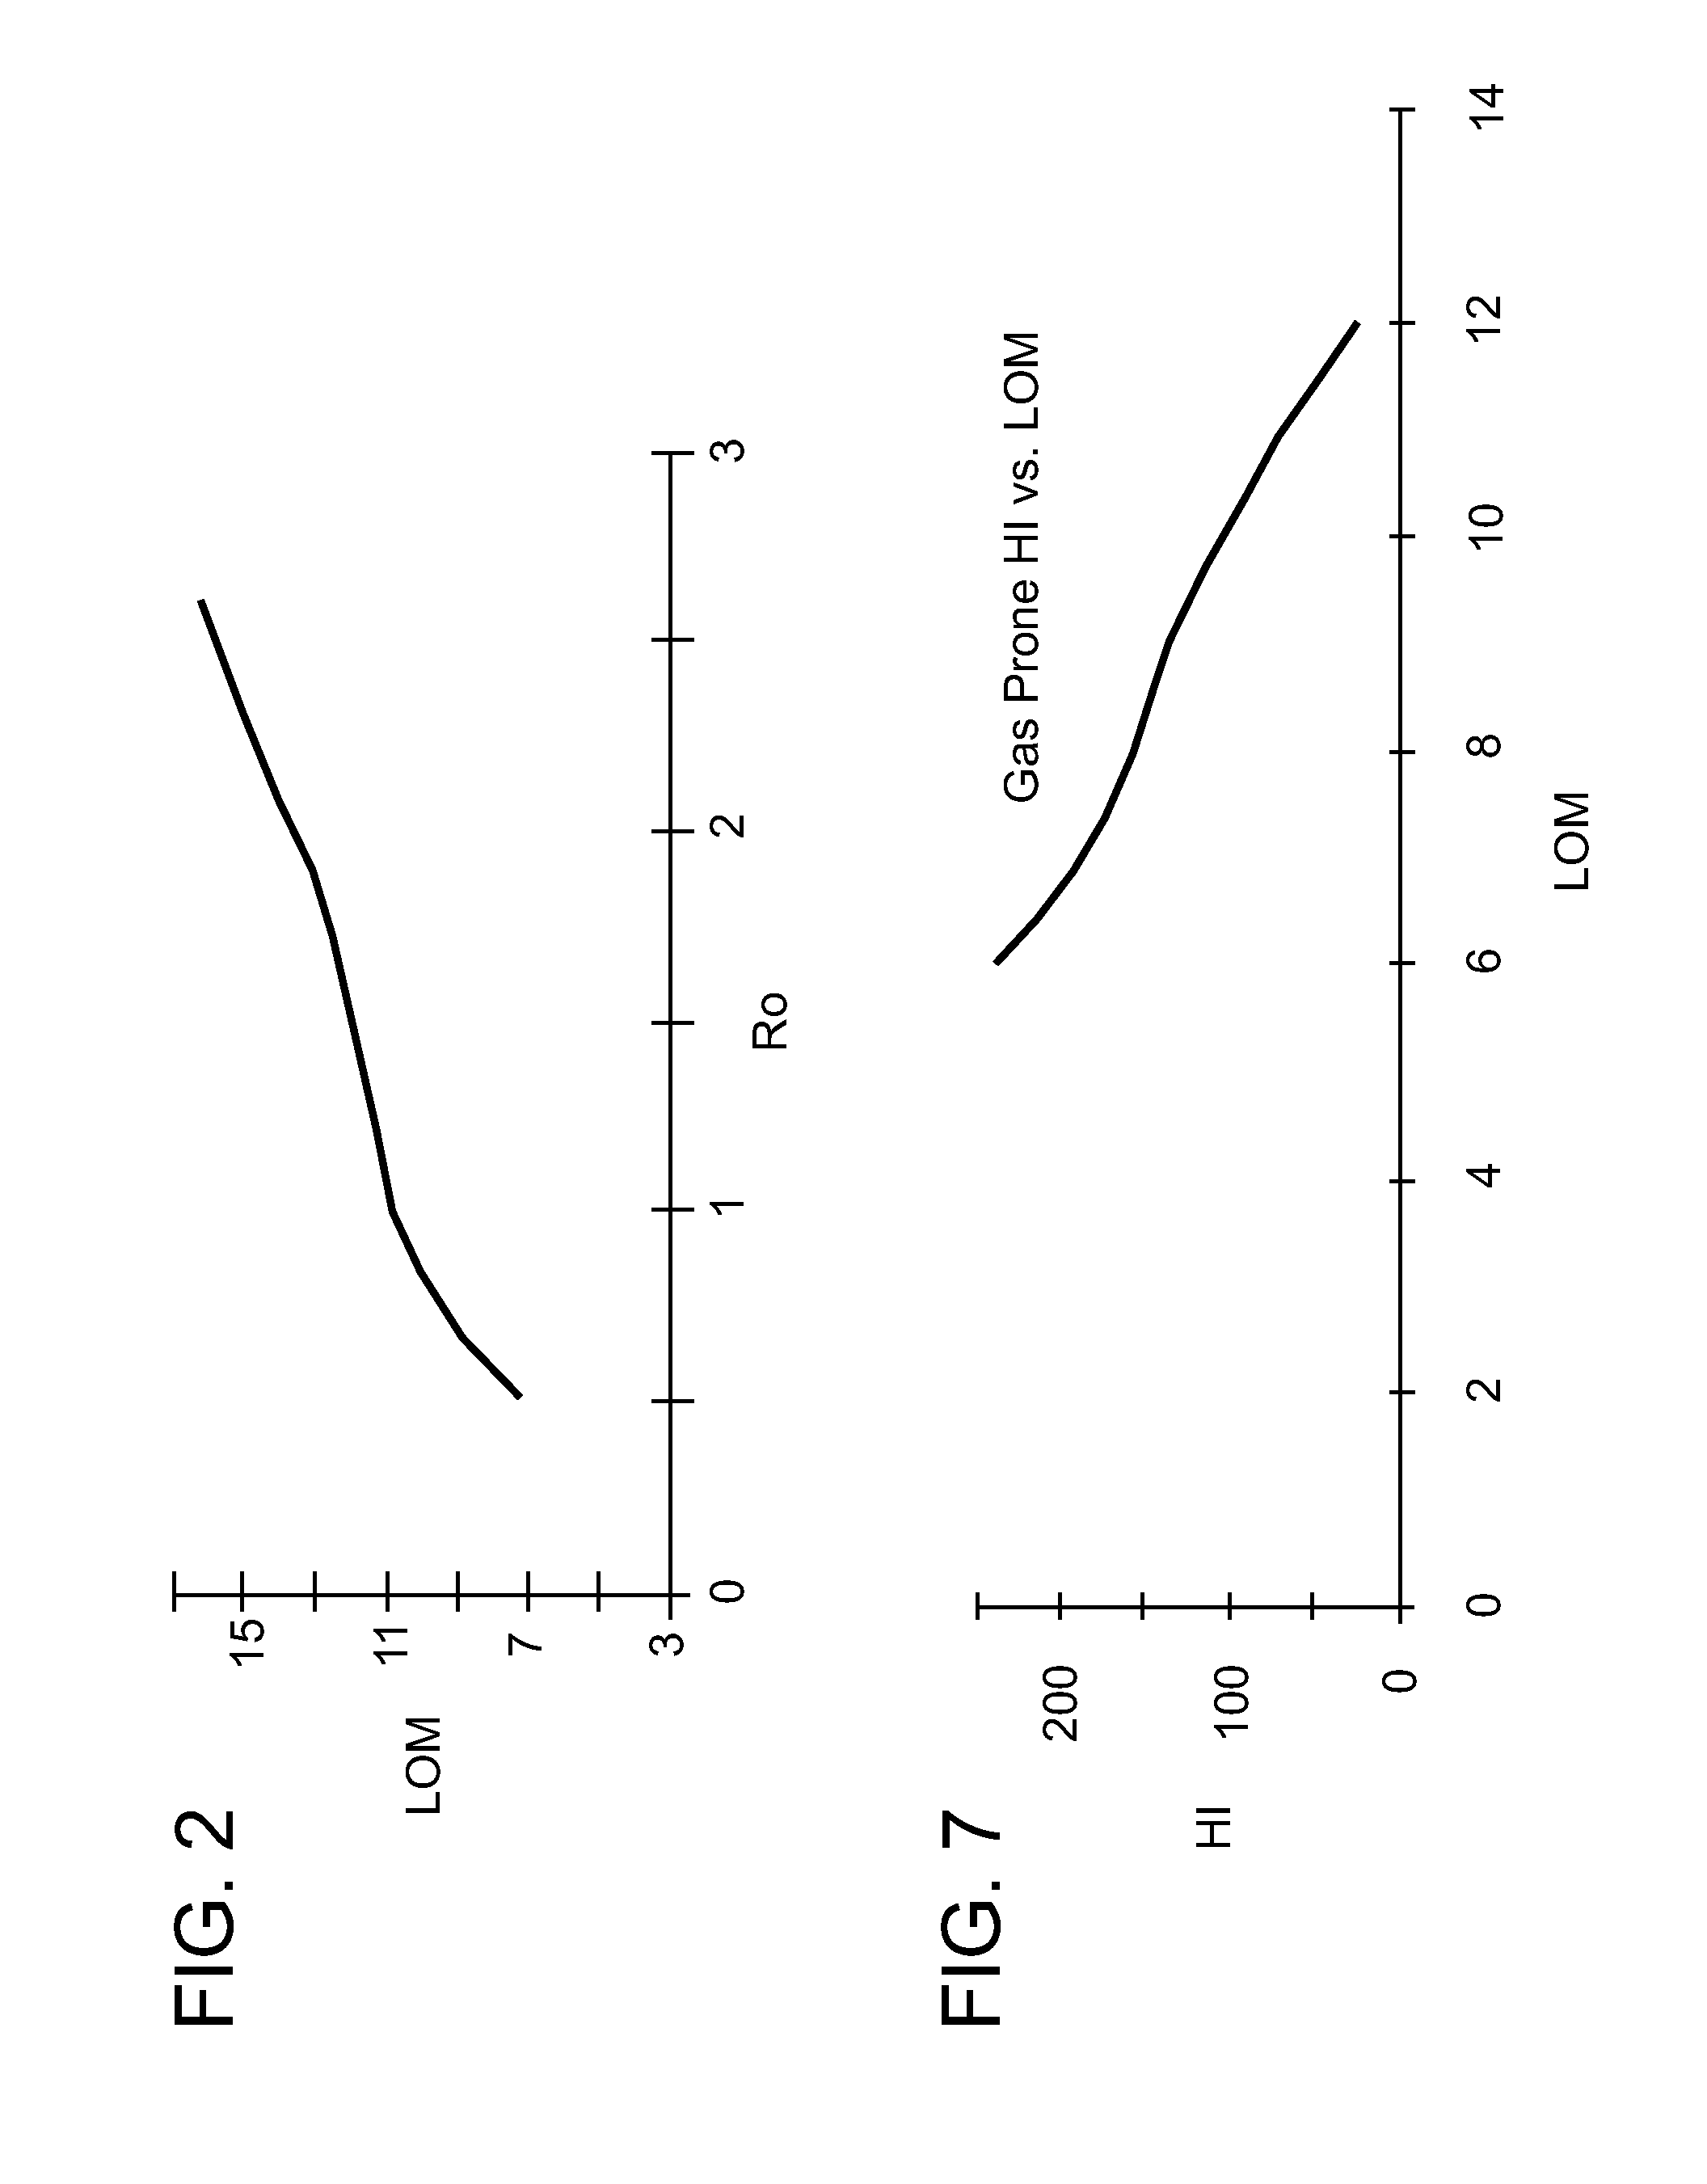 Method of predicting source rock thermal maturity from log responses